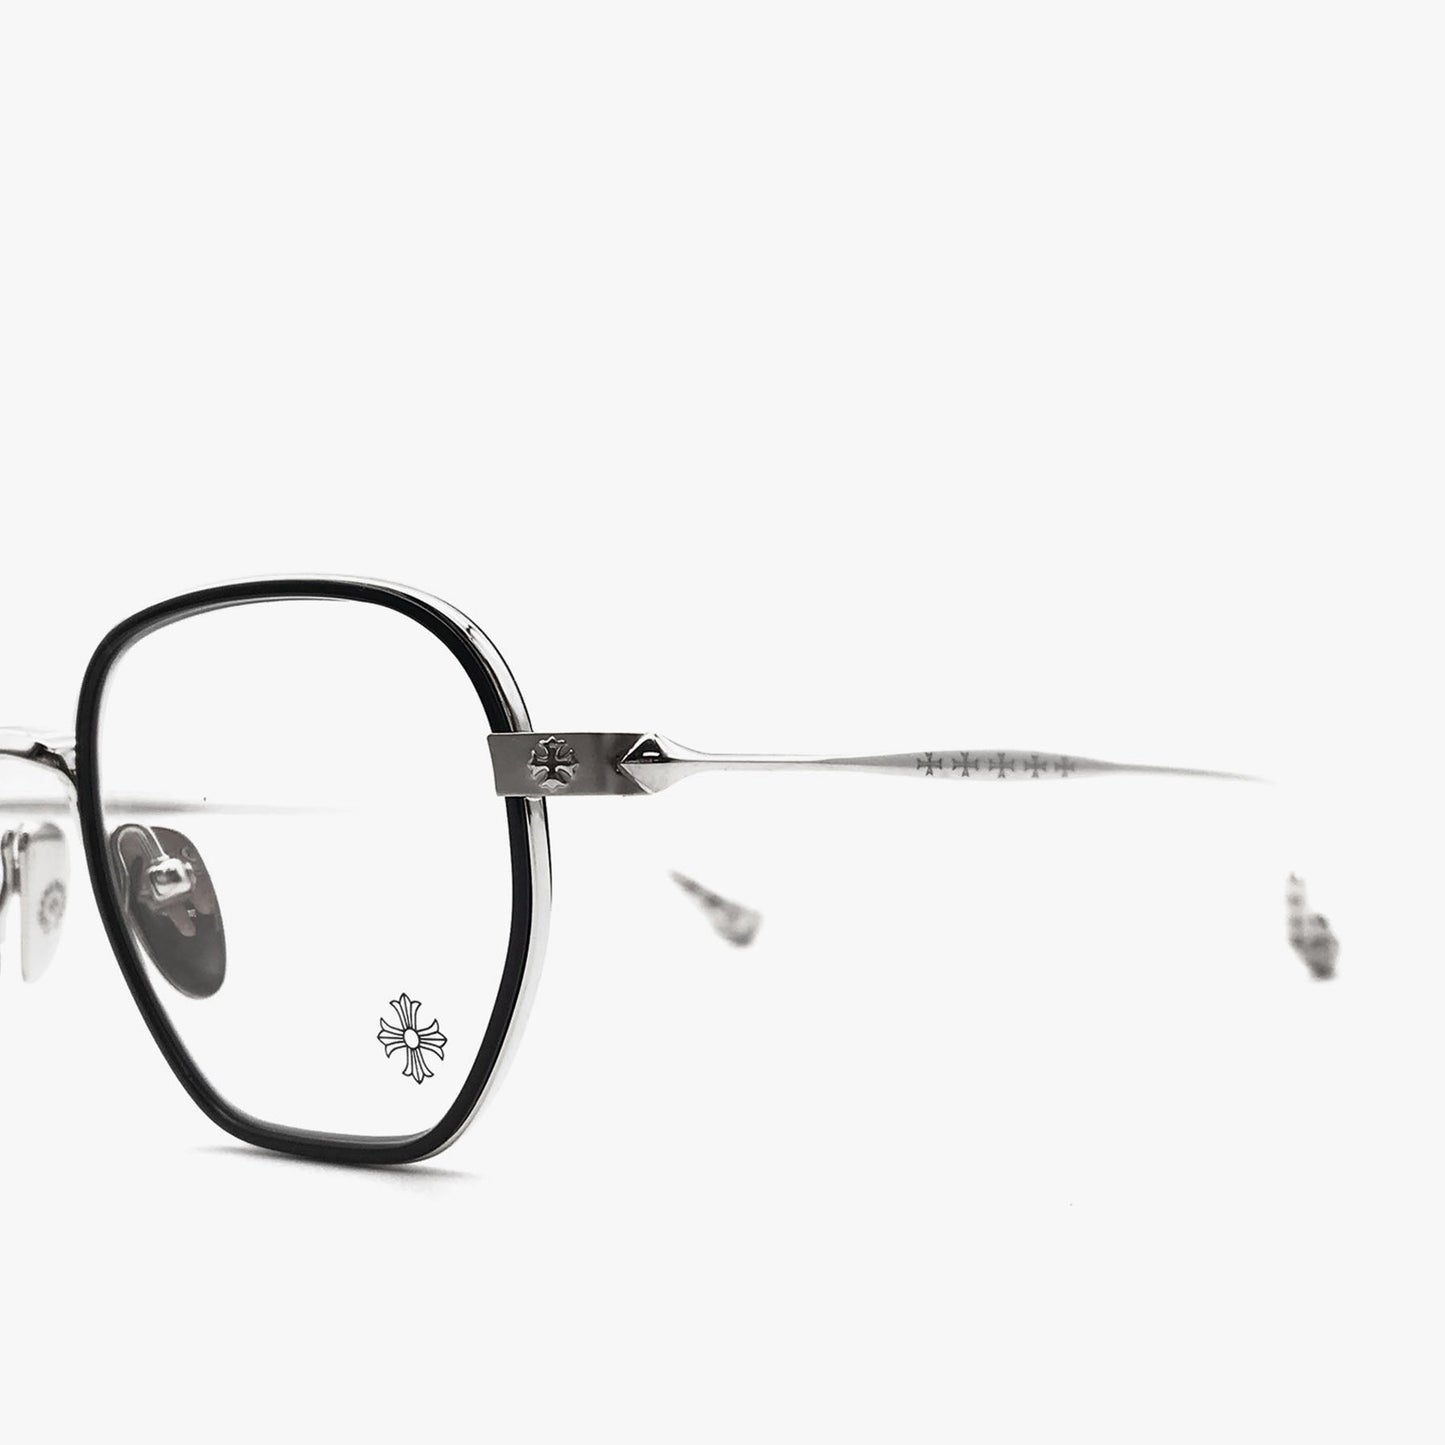 Chrome Hearts Bone Prone I BK-SS Black & Silver Glasses Frame - SHENGLI ROAD MARKET